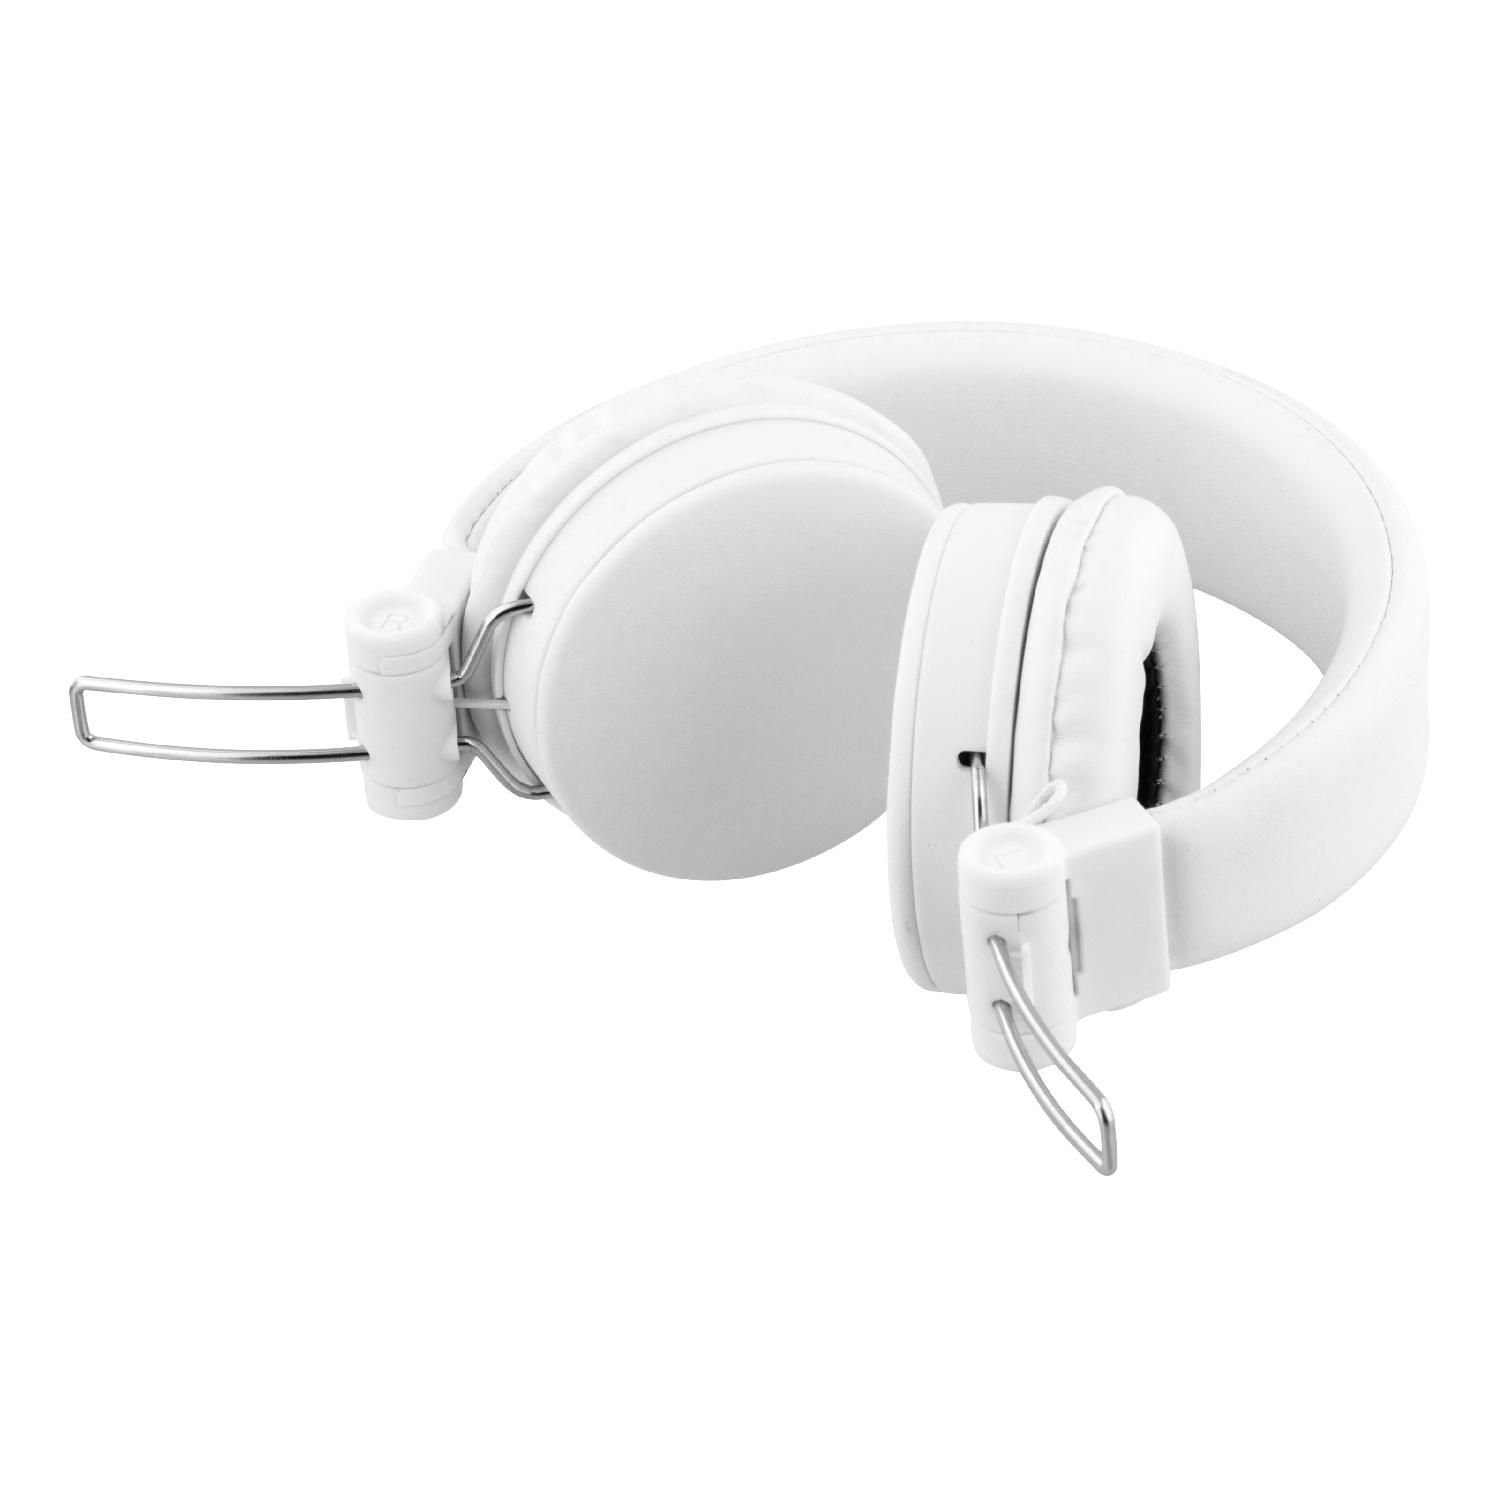 Klinkenanschluss Headset, 5 weiß 3.5mm Herstellergarantie) Kopfhörer STREETZ inkl. Kabel Jahre 1,2m On-Ear-Kopfhörer Mikrofon, (integriertes Ohrpolster faltbares